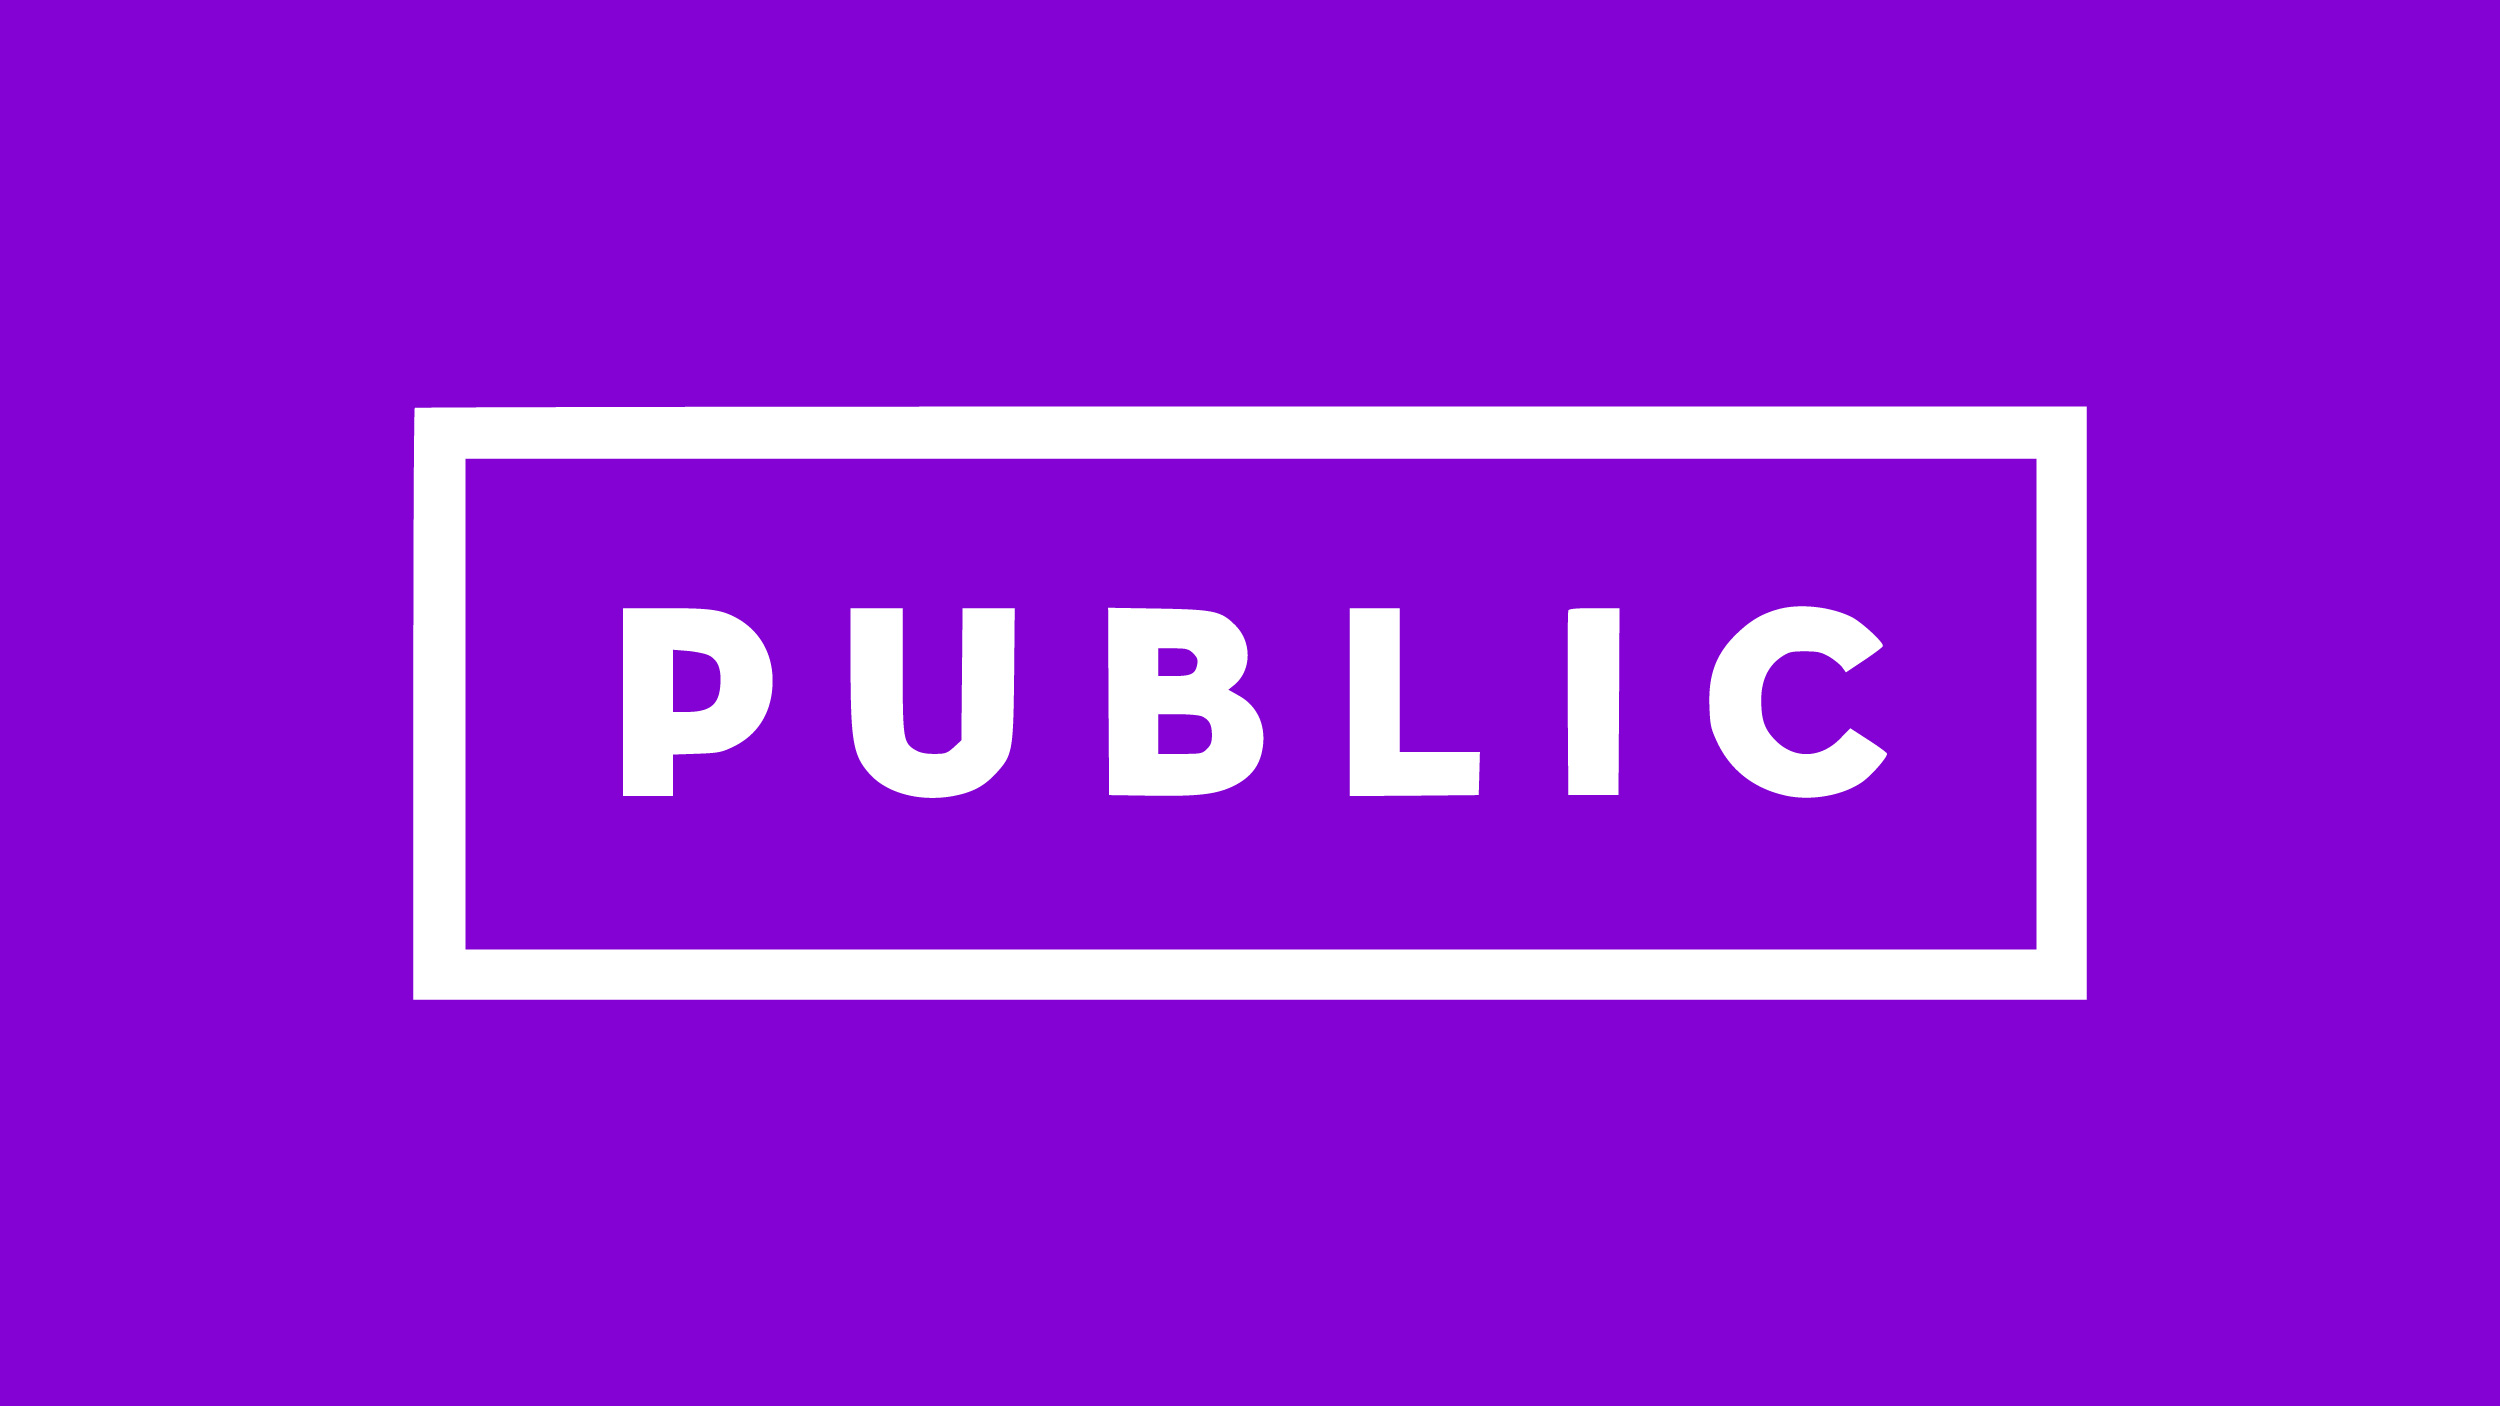 Public logo on a purple background.